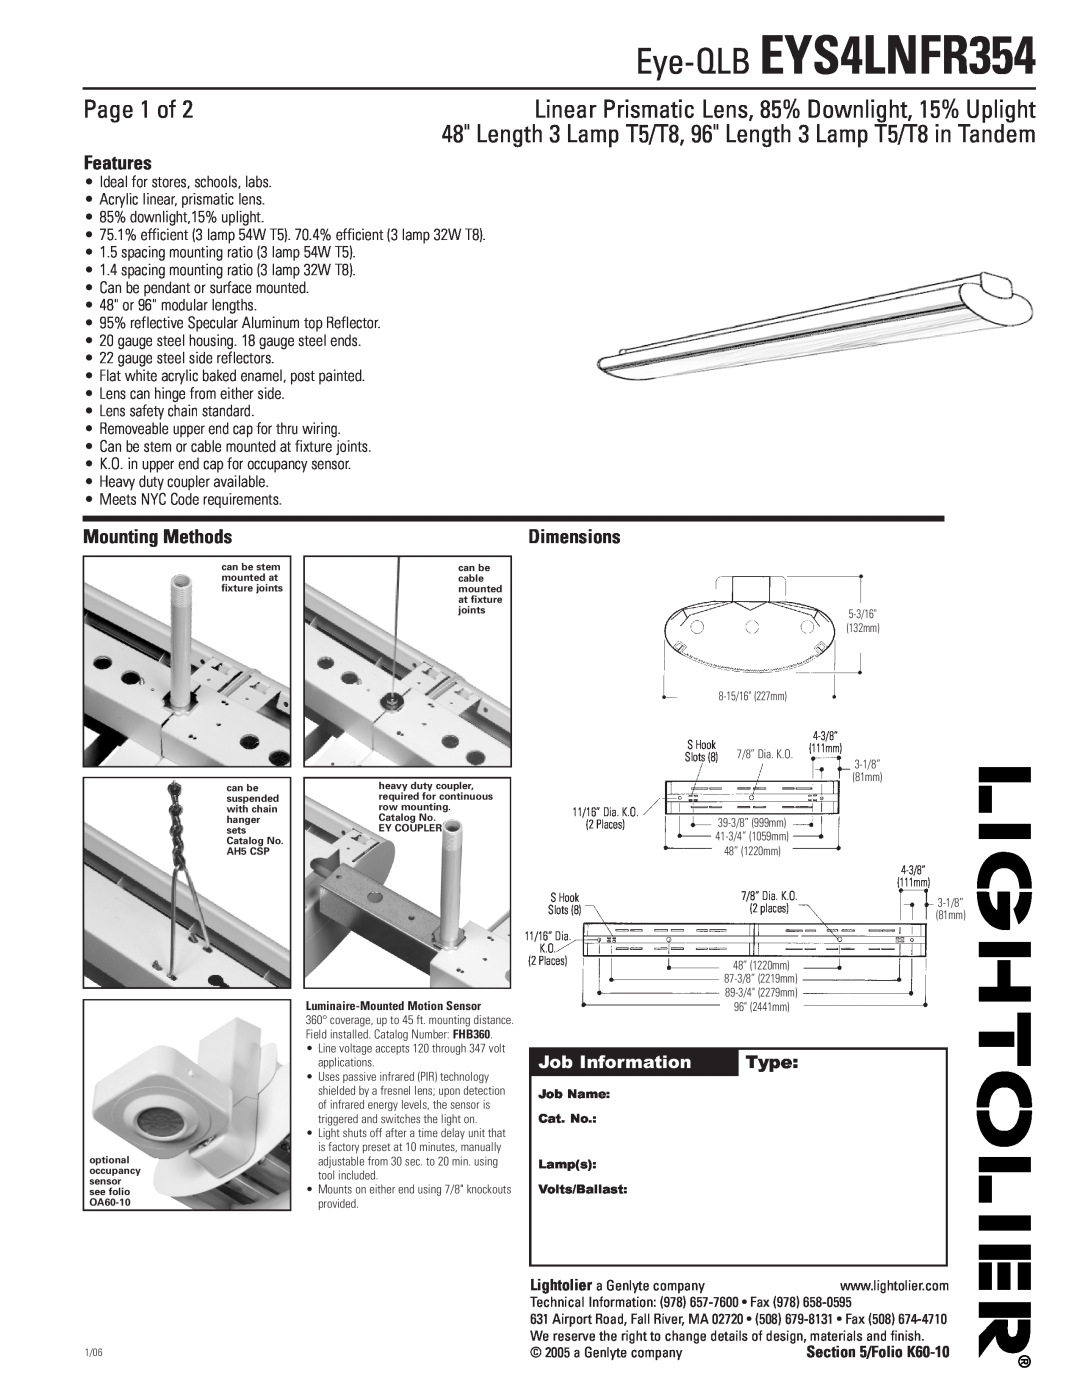 Lightolier EYS4LNFR332 dimensions Eye-QLB EYS4LNFR354, Page 1 of, Linear Prismatic Lens, 85% Downlight, 15% Uplight, Type 